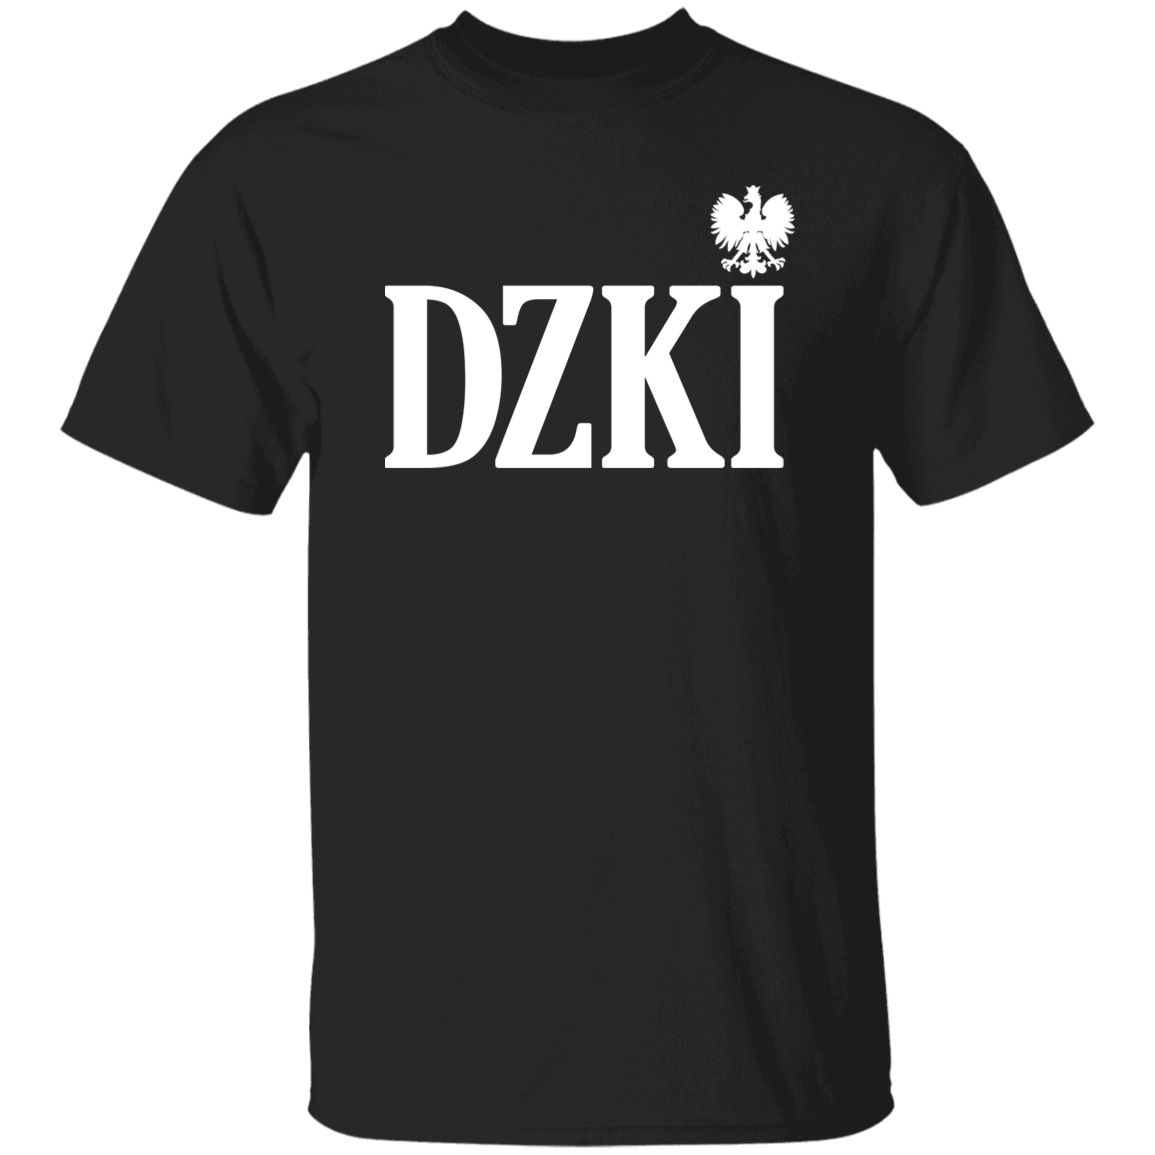 DZKI Polish Surname Ending Apparel CustomCat G500 5.3 oz. T-Shirt Black S